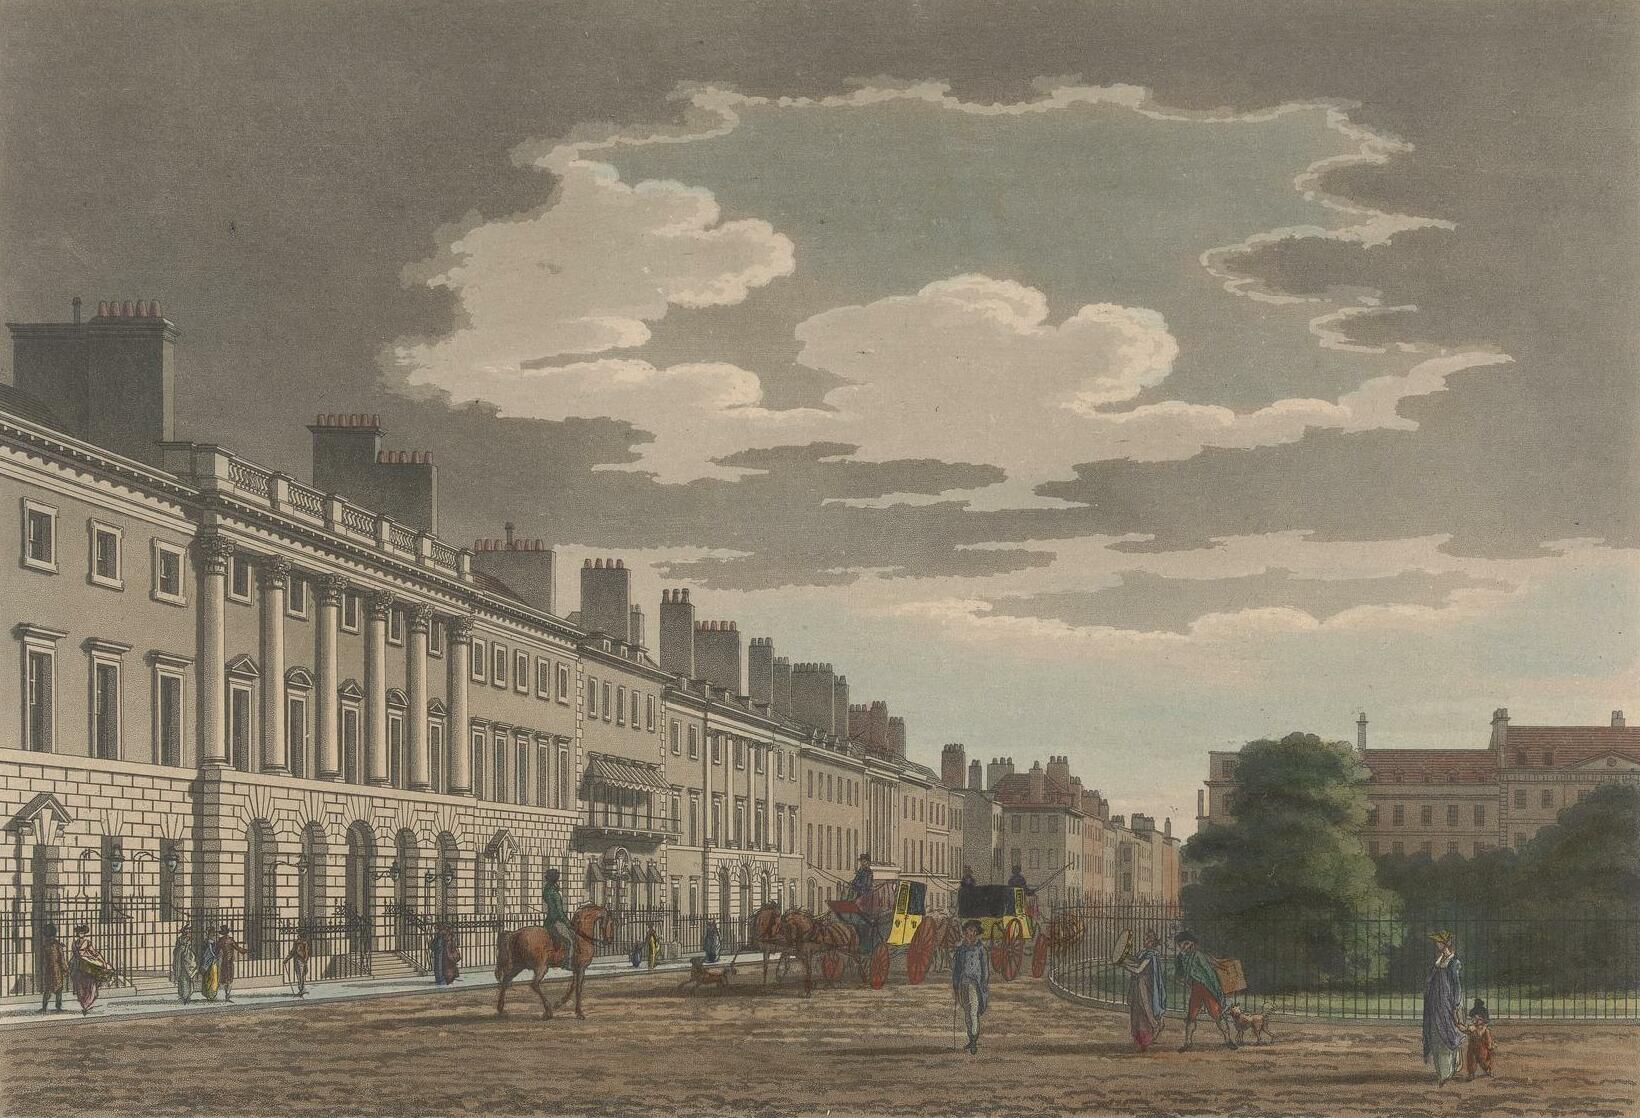 Historic portrait of Grosvenor Square in Mayfair